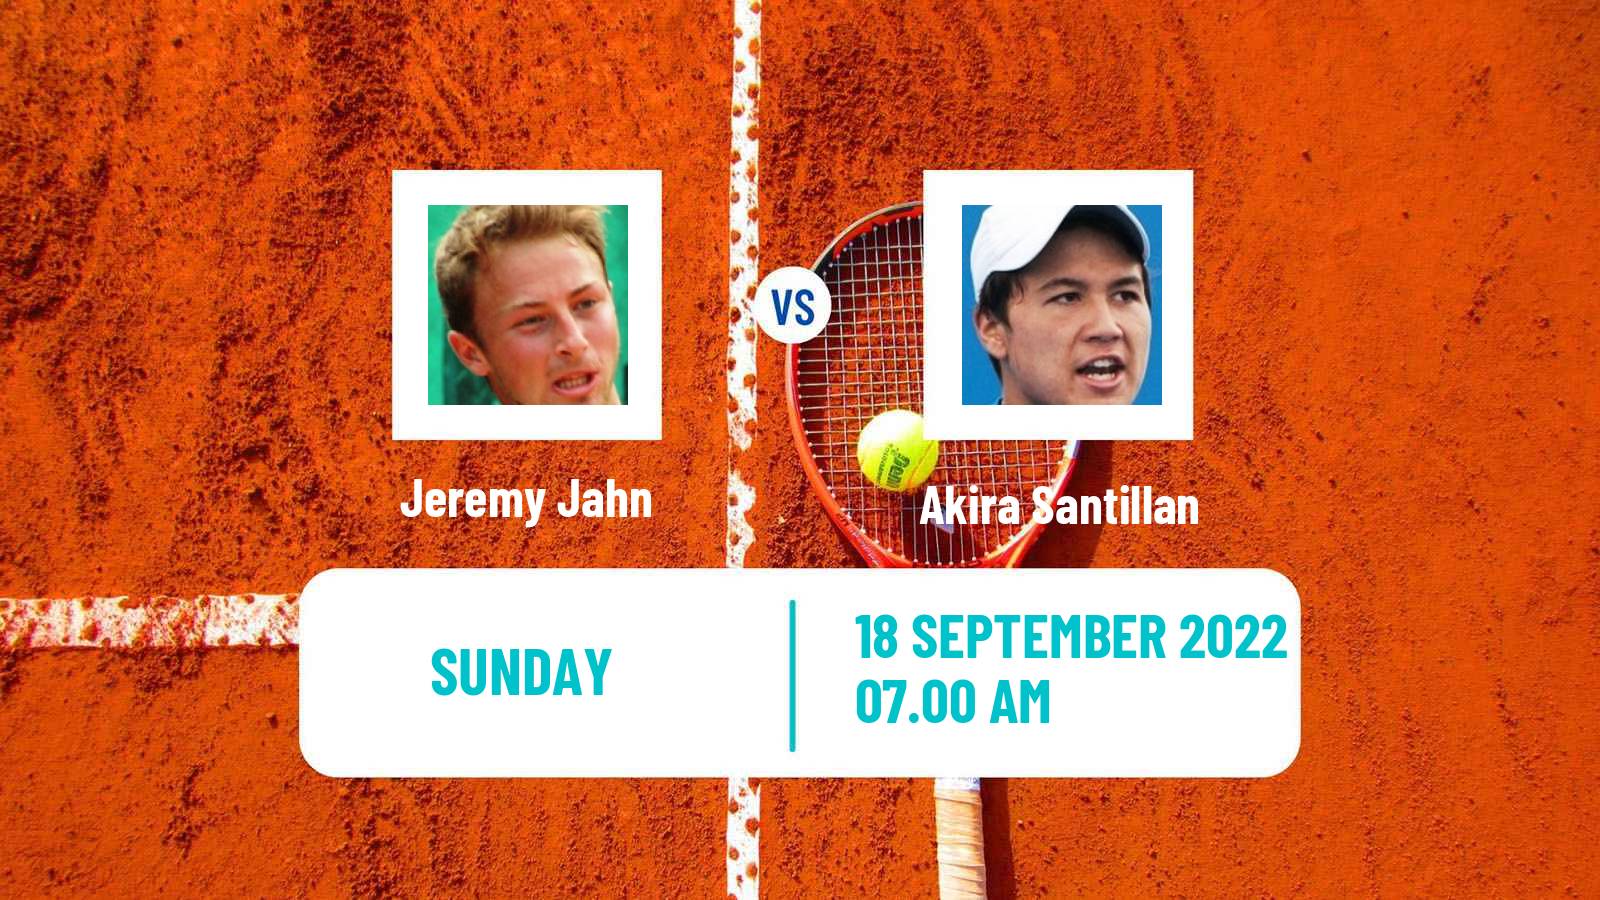 Tennis ATP Challenger Jeremy Jahn - Akira Santillan